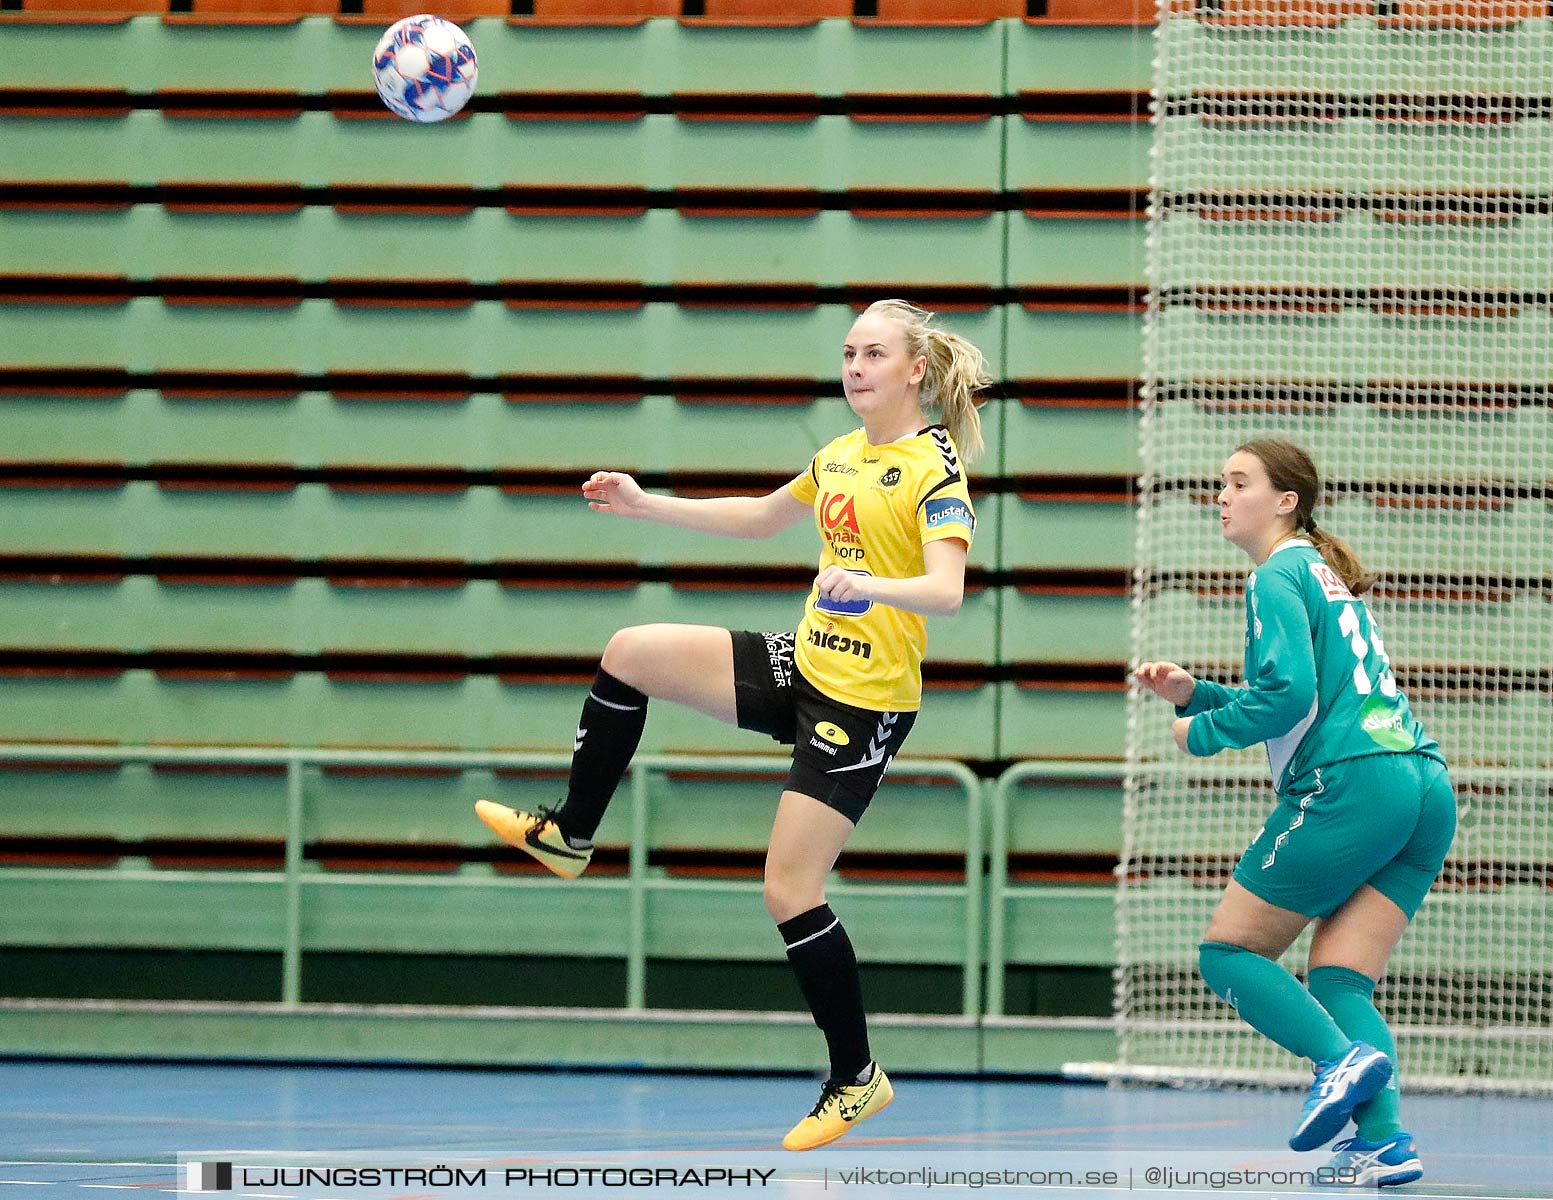 Skövde Futsalcup 2019 Damer Skultorps IF-Axvalls IF,dam,Arena Skövde,Skövde,Sverige,Futsal,,2019,227003